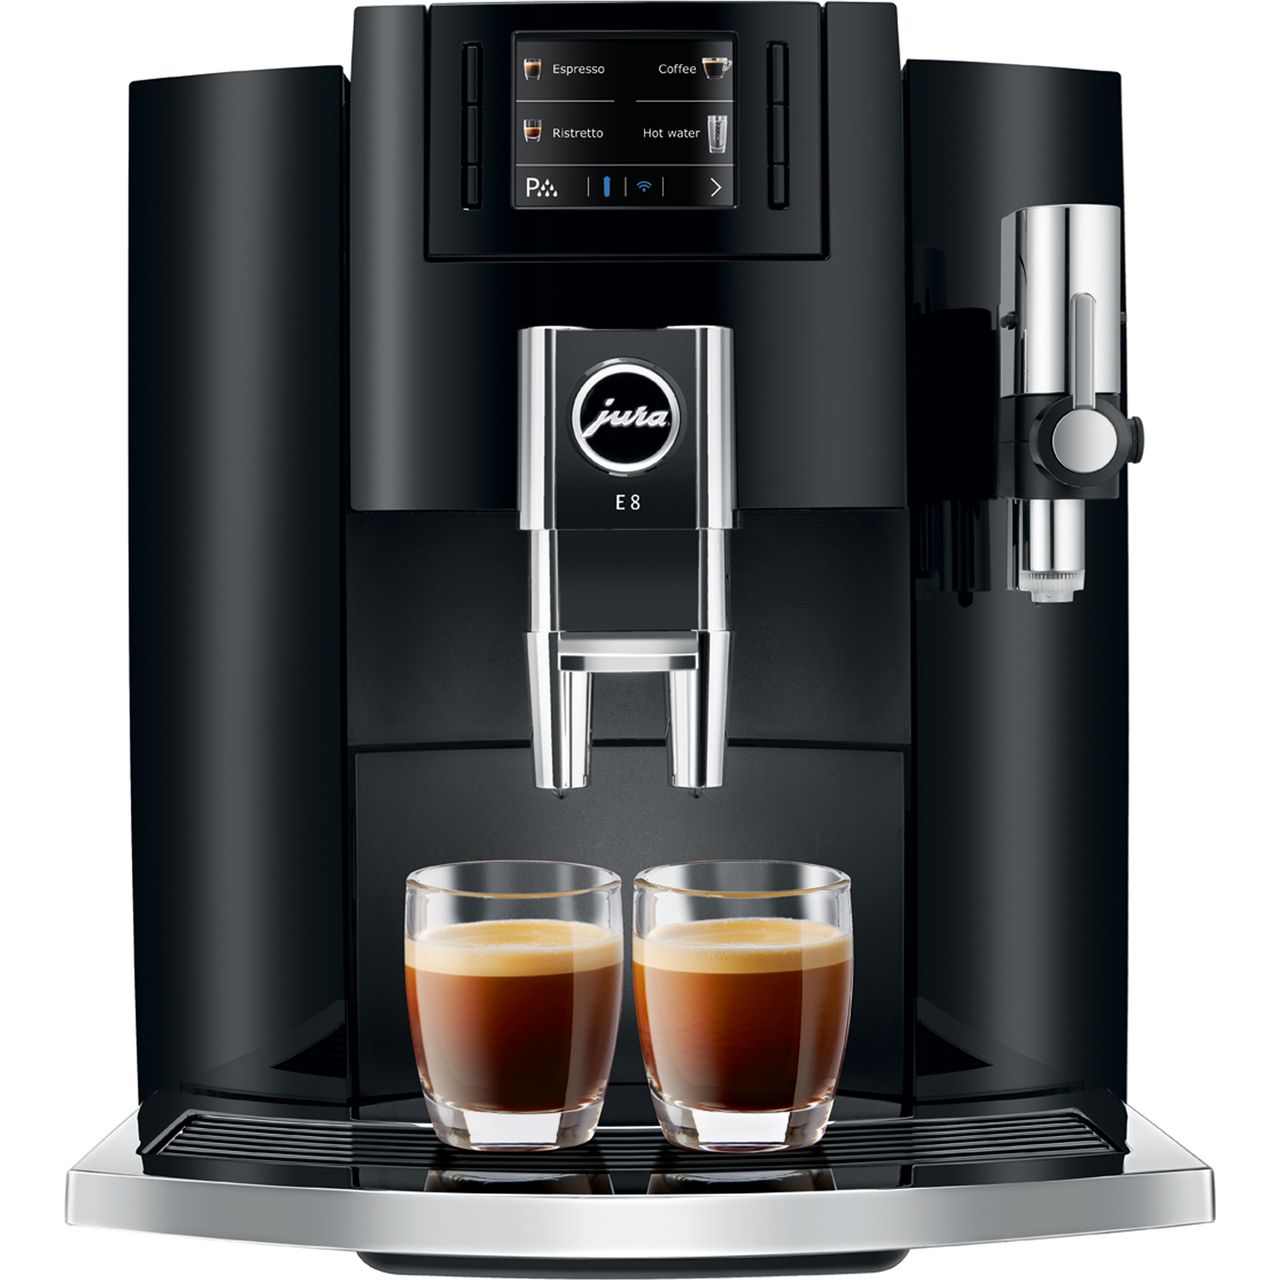 Jura E8 15268 Bean to Cup Coffee Machine Review